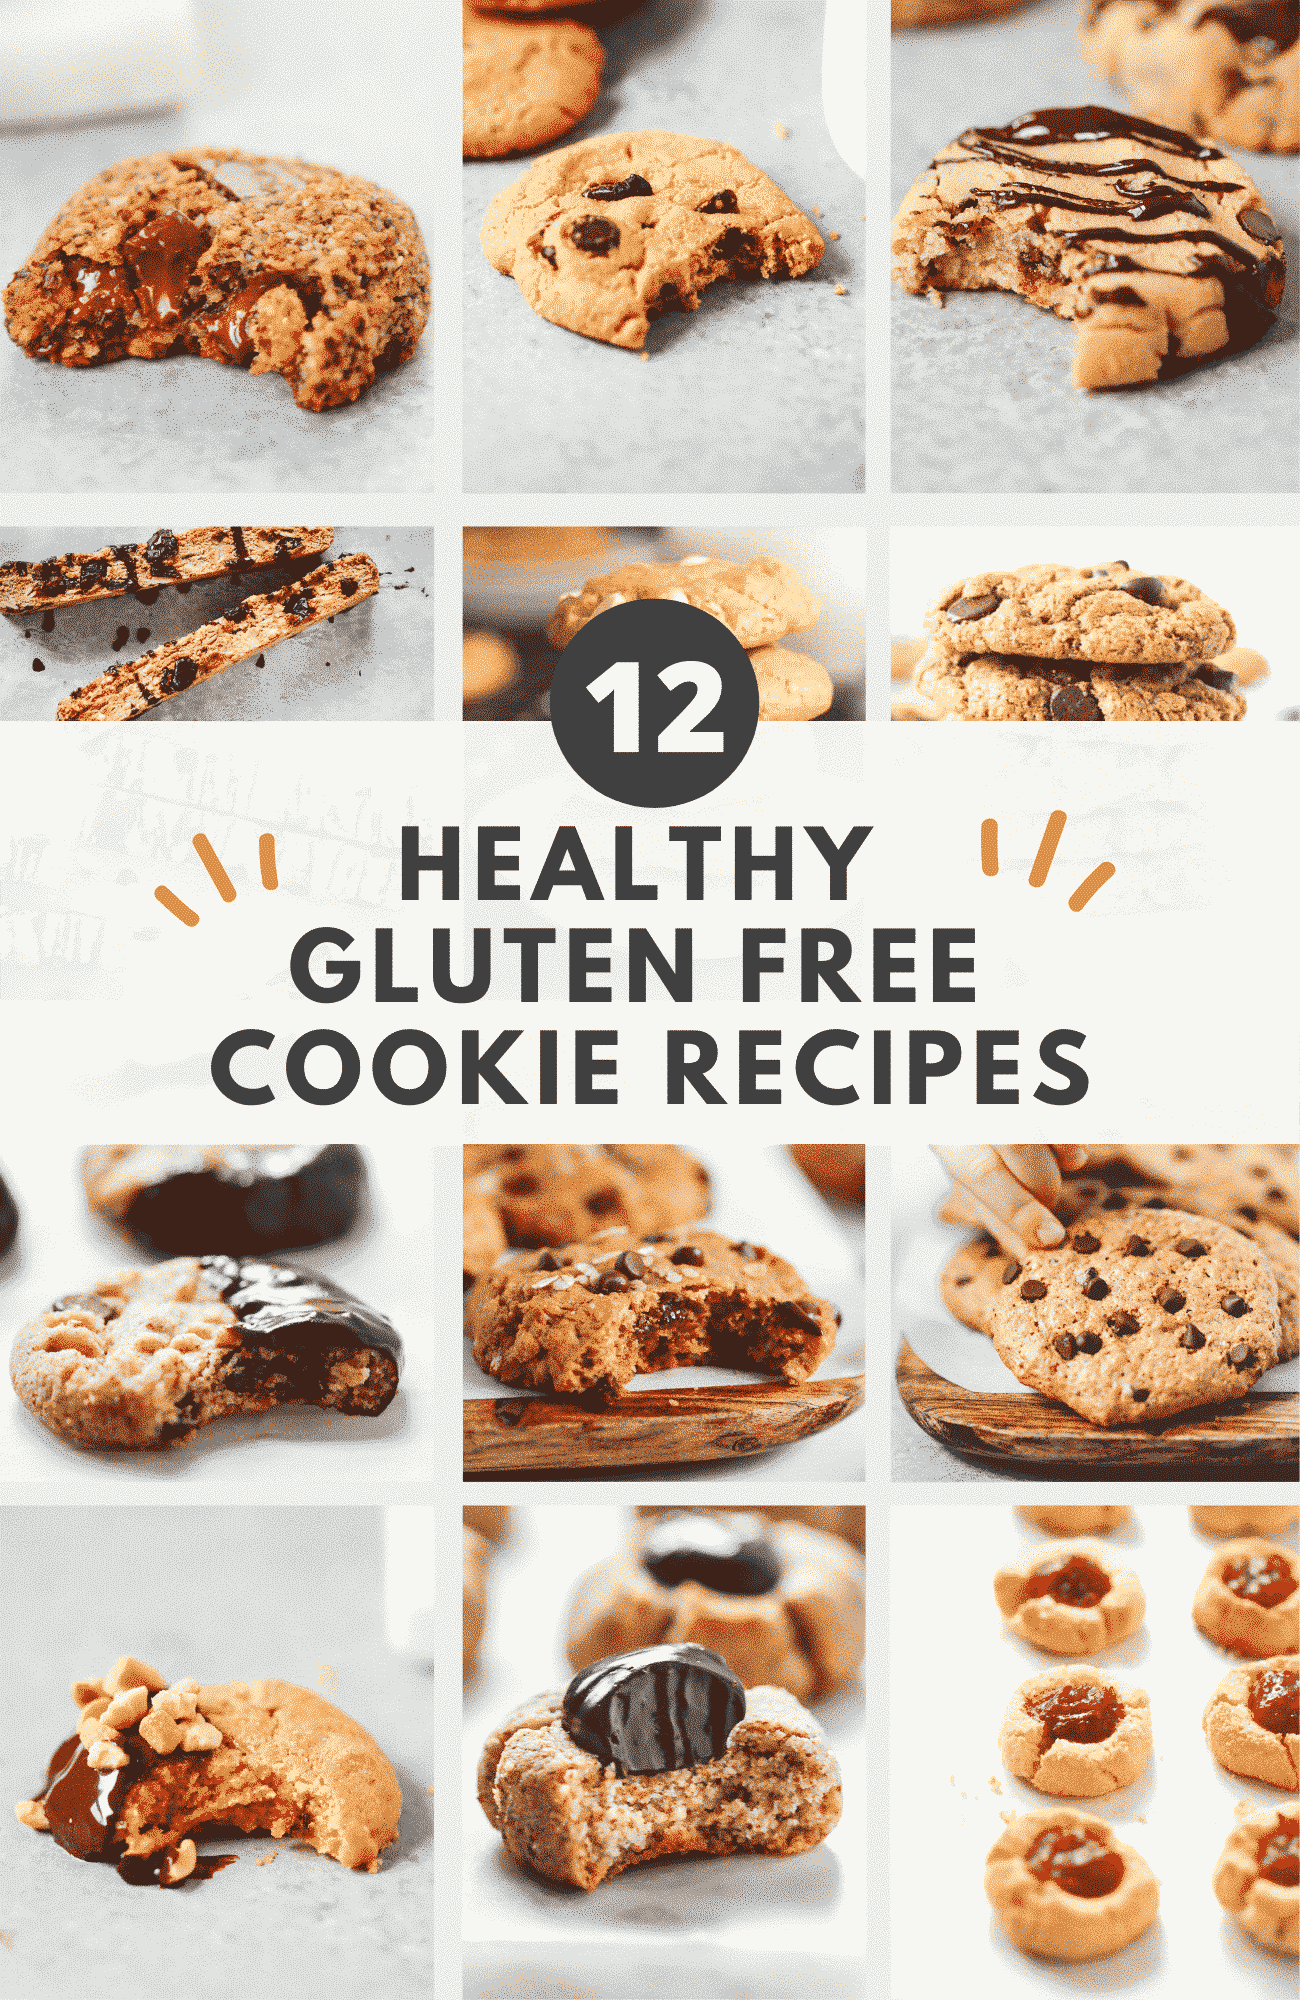 Gluten Free Cookie Recipes